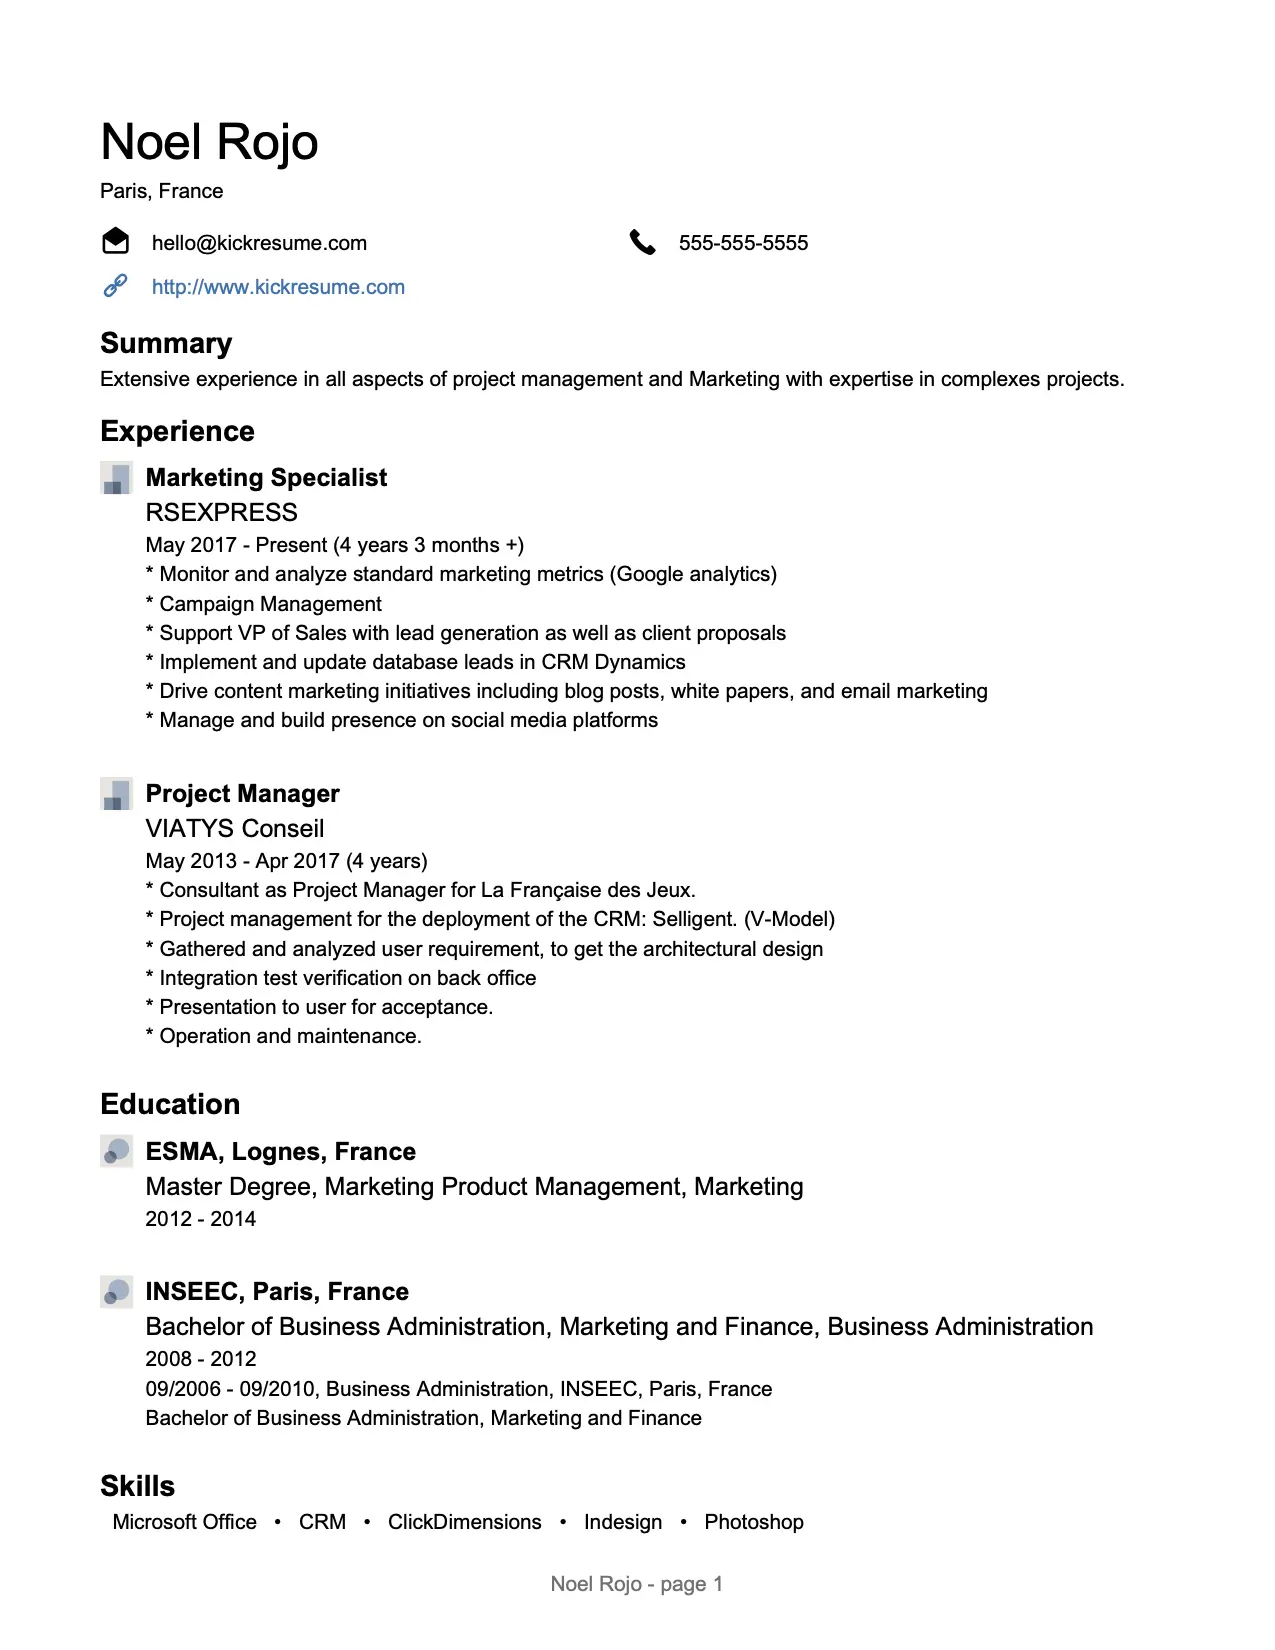 LinkedIn Resume Builder: Download a Resume as a PDF